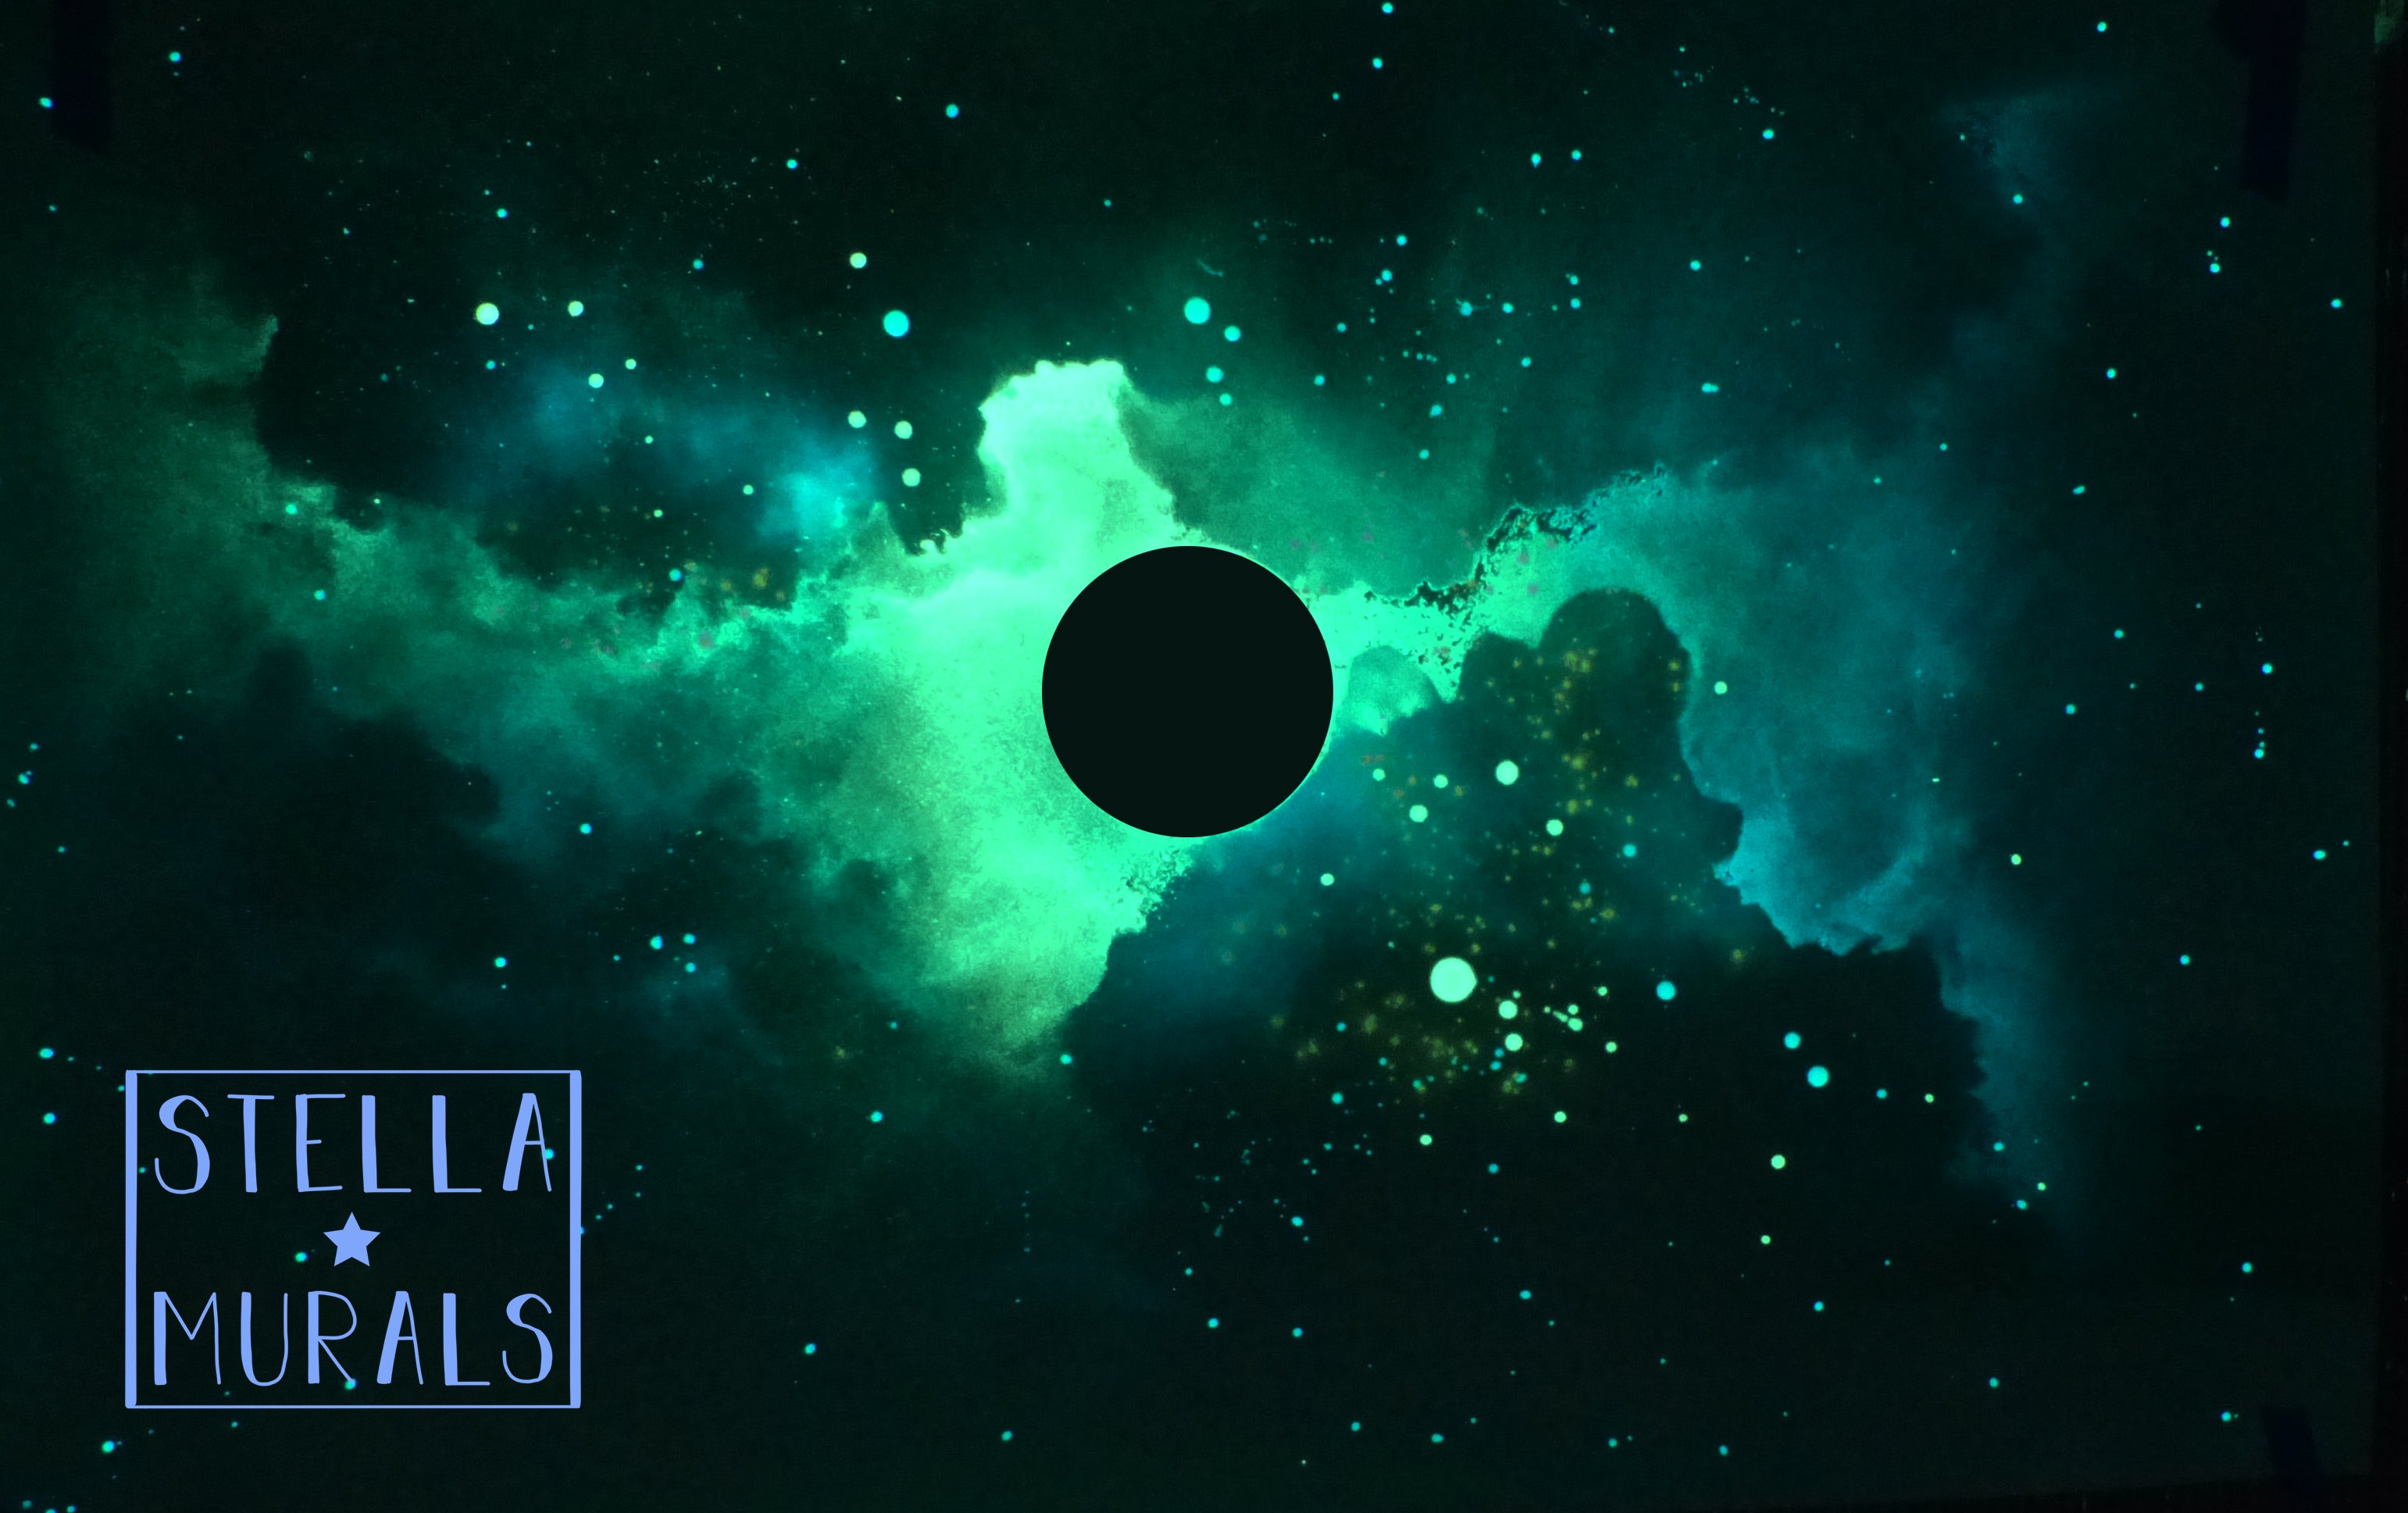 Glow in the dark black hole with green and blue nebula swirling around it. Glow stars surround the nebula. 